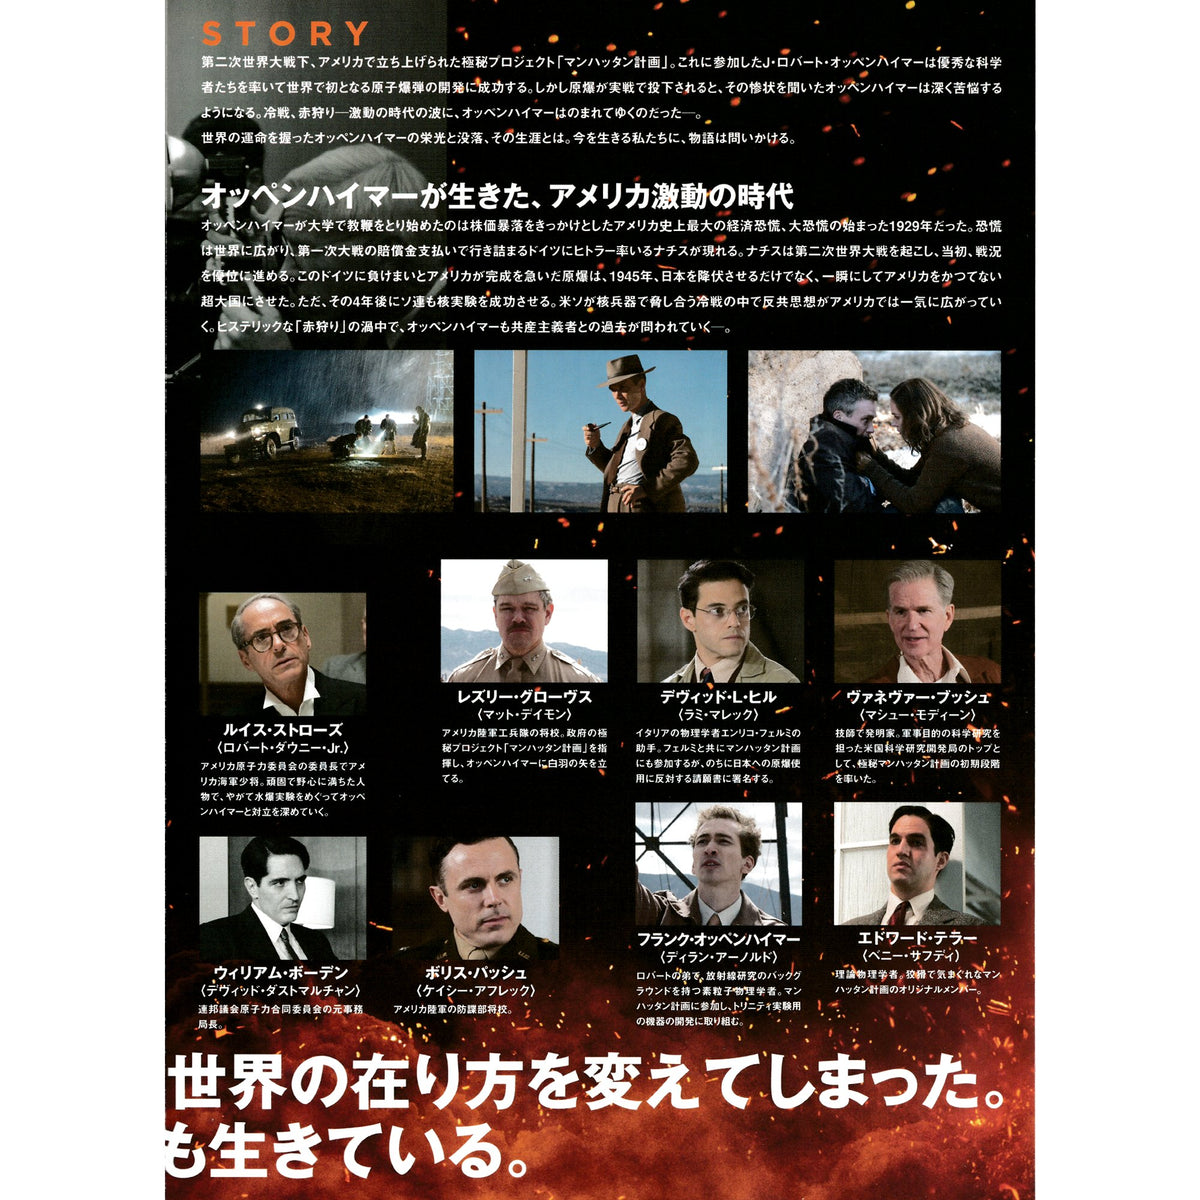 New Limited Edition Japanese Chirashi B5 Mini Movie Poster Oppenheimer - Sugoi JDM